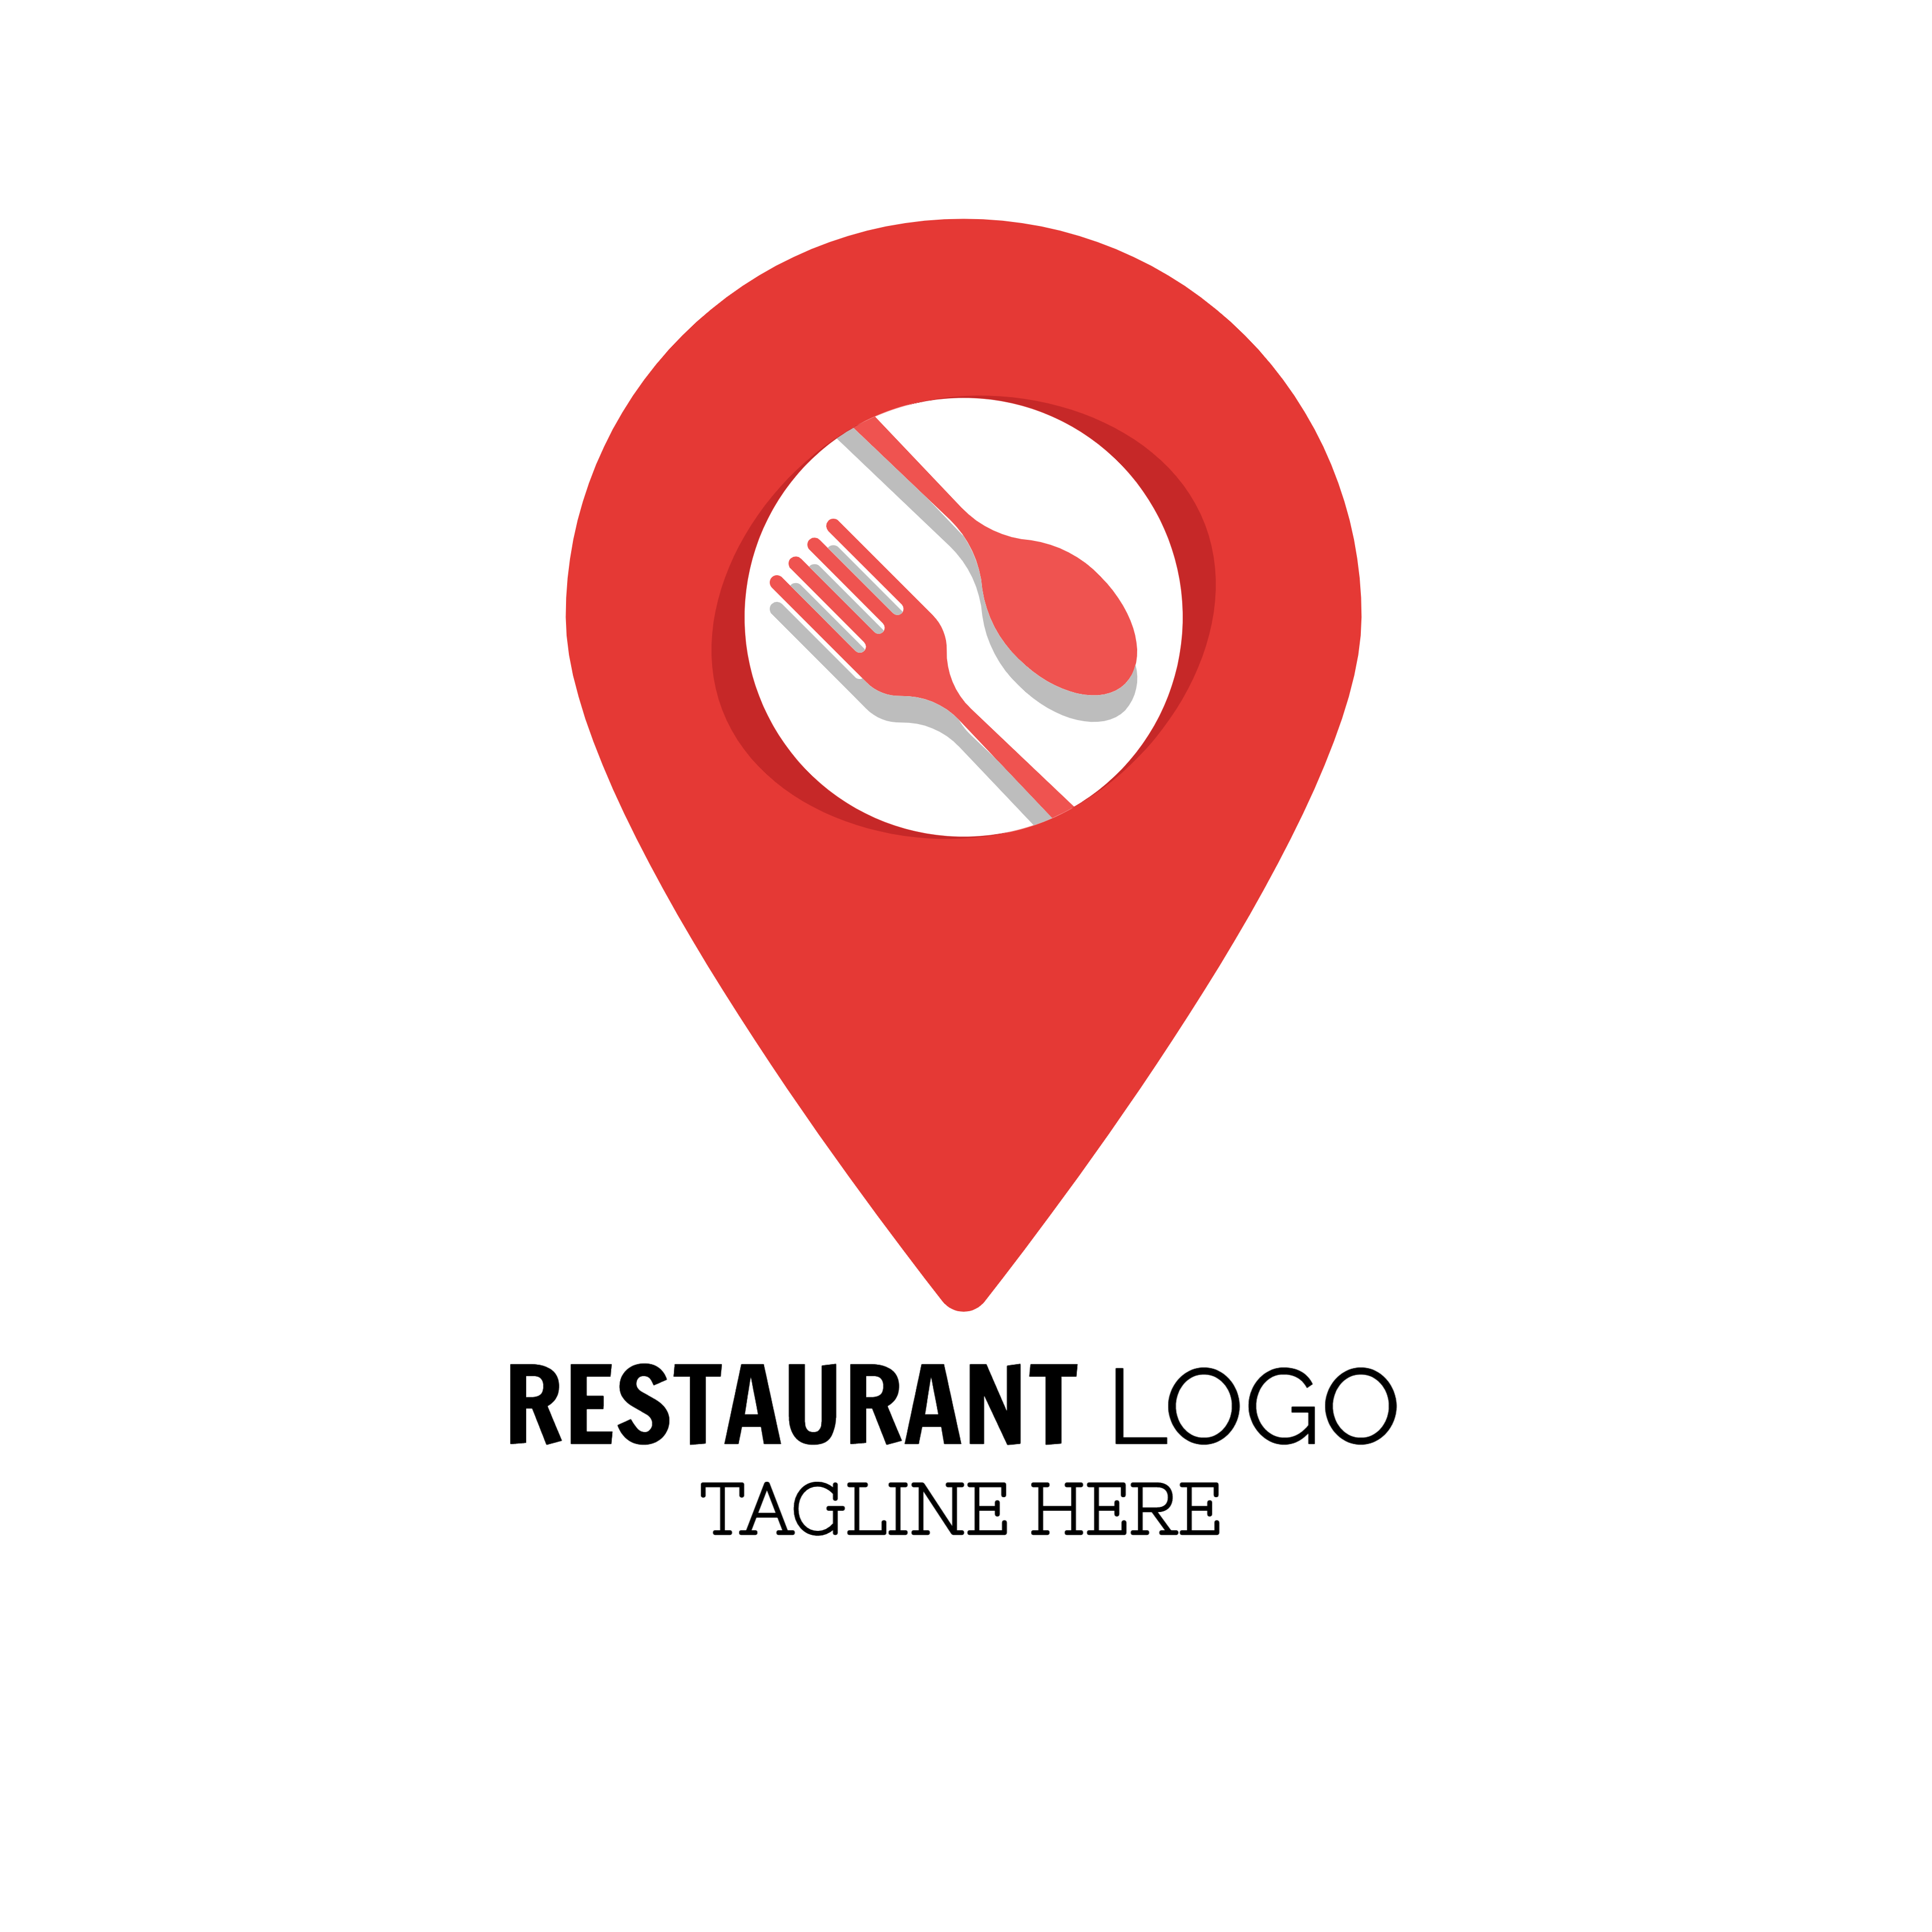 Restraint Logo - Latest Restaurant Food Logo Template | Free Digital Designs On Bk ...